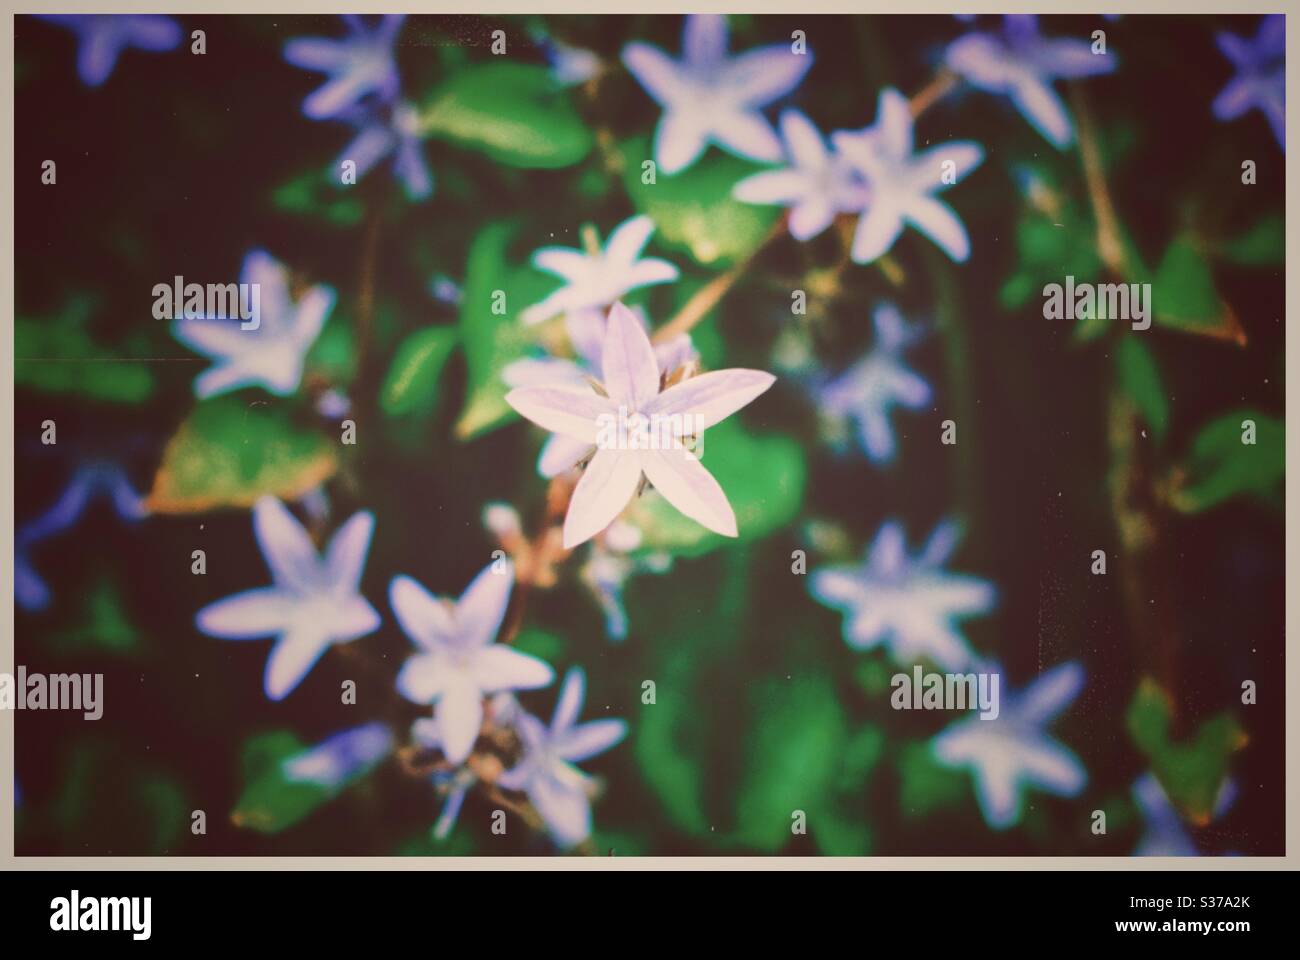 Amsonia Star Flower in Blossom Stock Photo